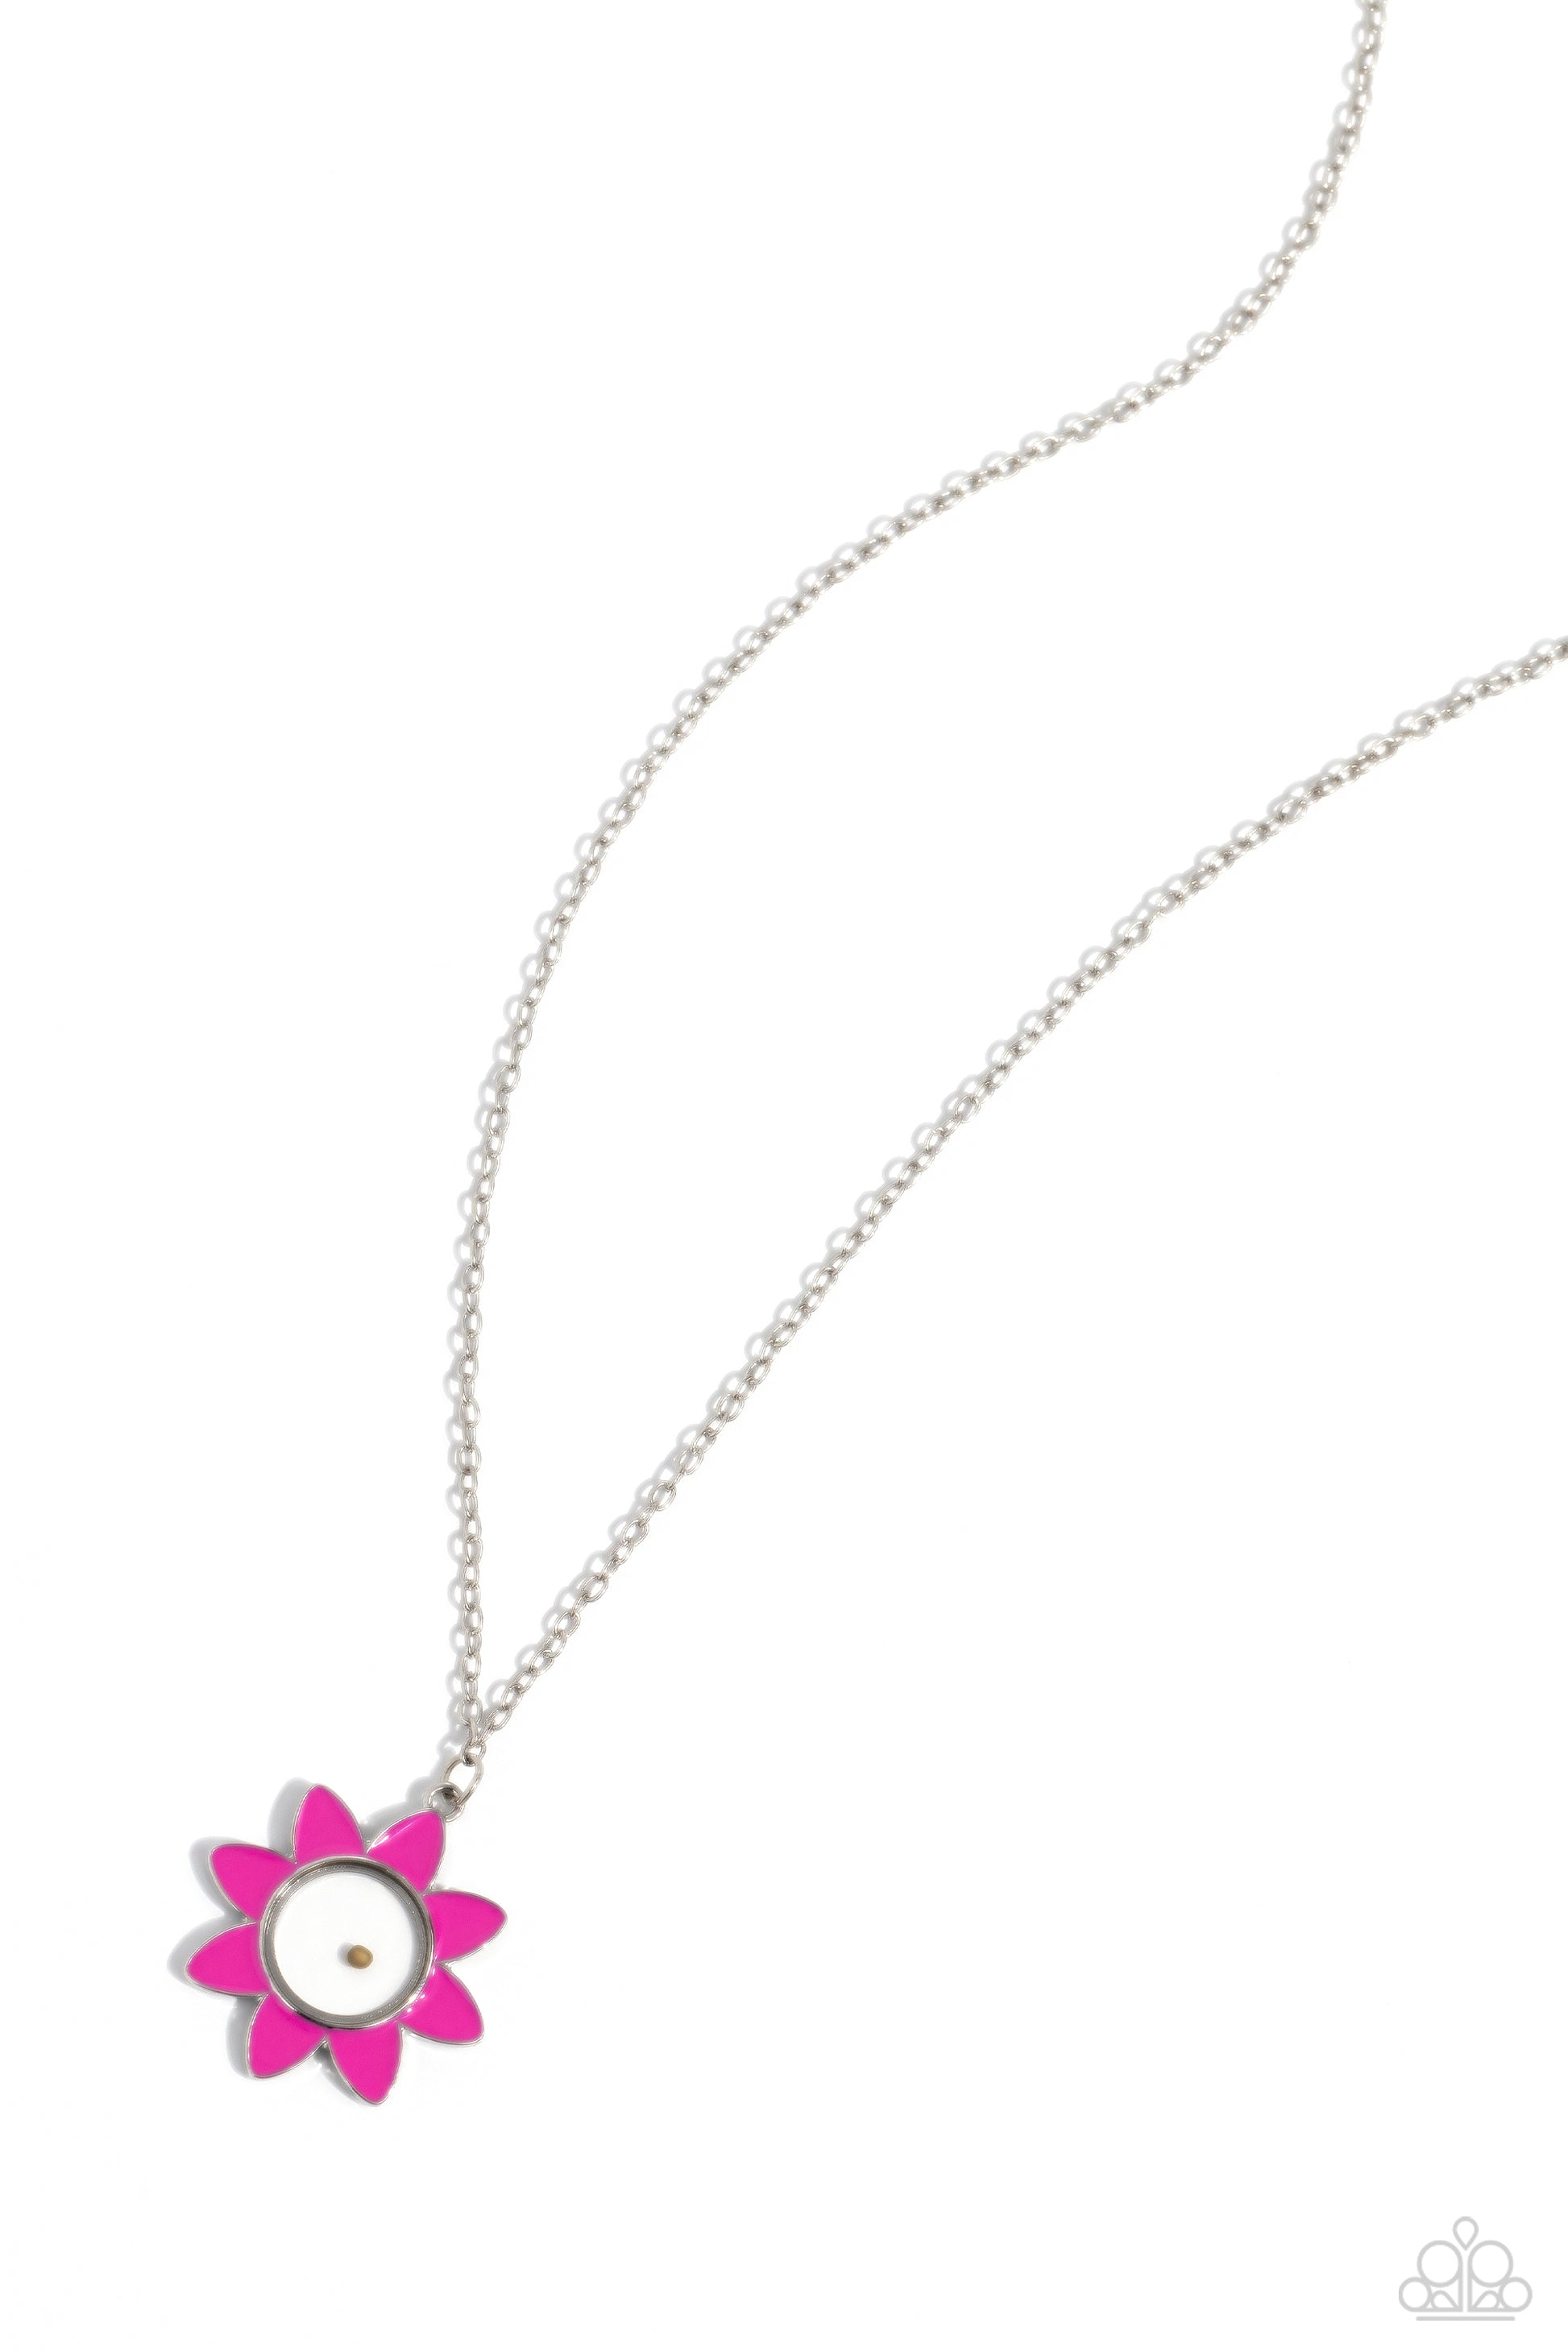 Petals of Inspiration - pink - Paparazzi necklace